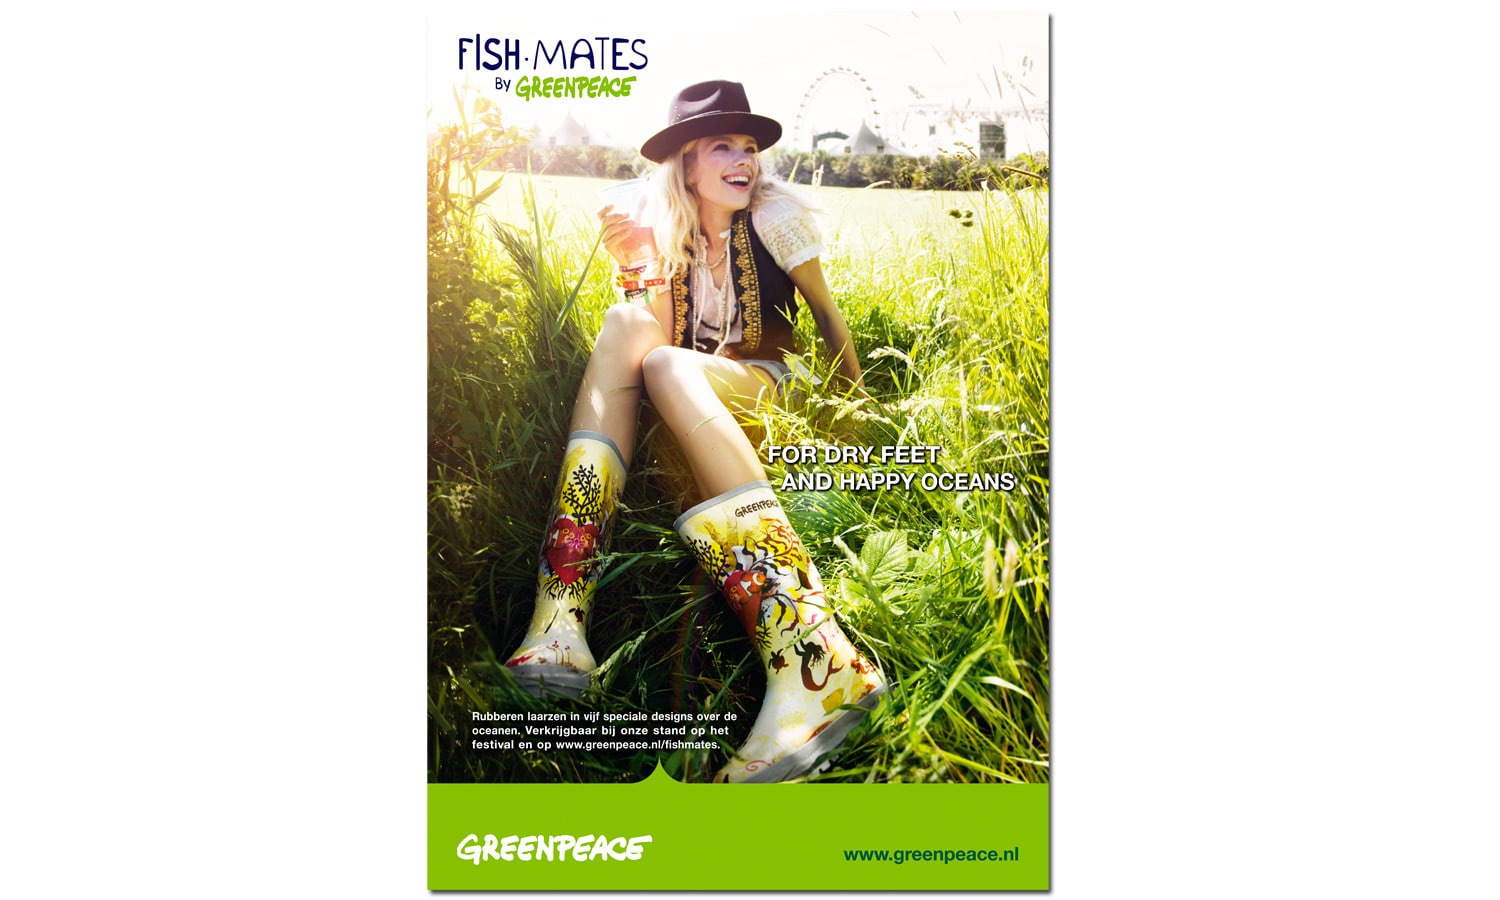 Greenpeace "Fish Mates" - poster